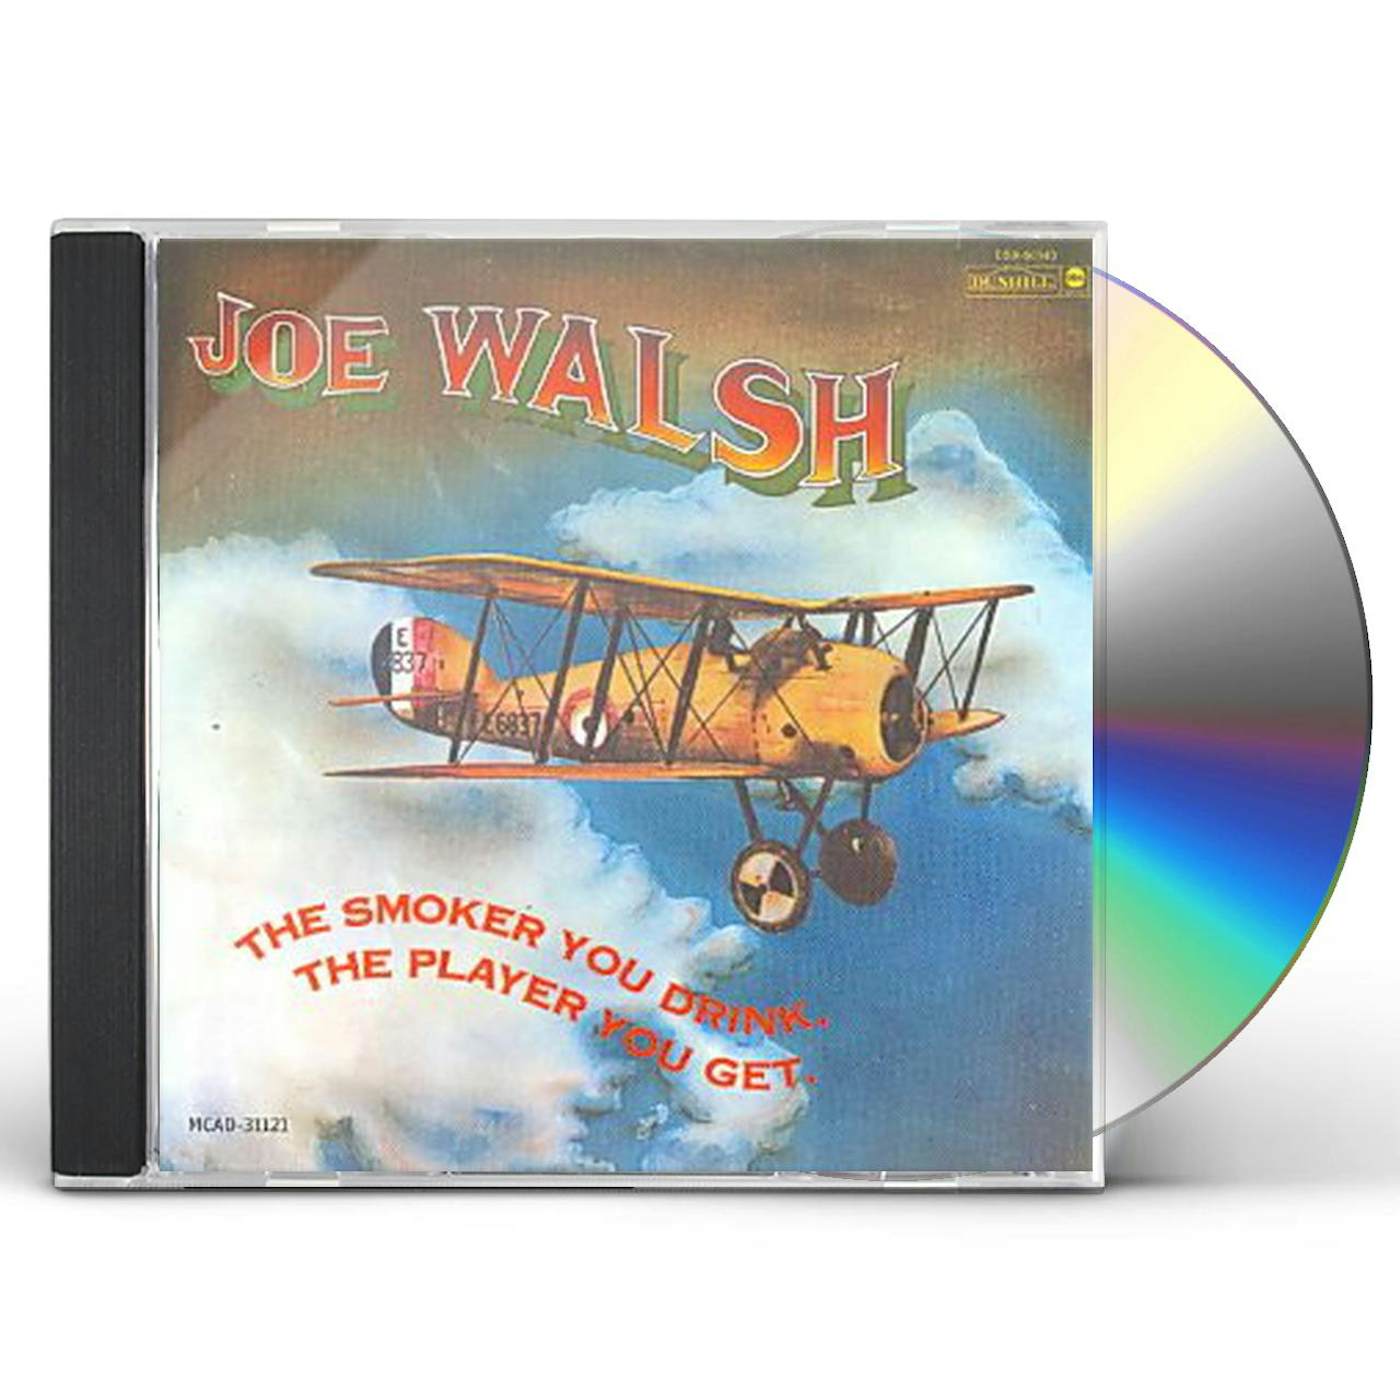 Joe Walsh SMOKER YOU DRINK THE PLAYER YOU GET CD